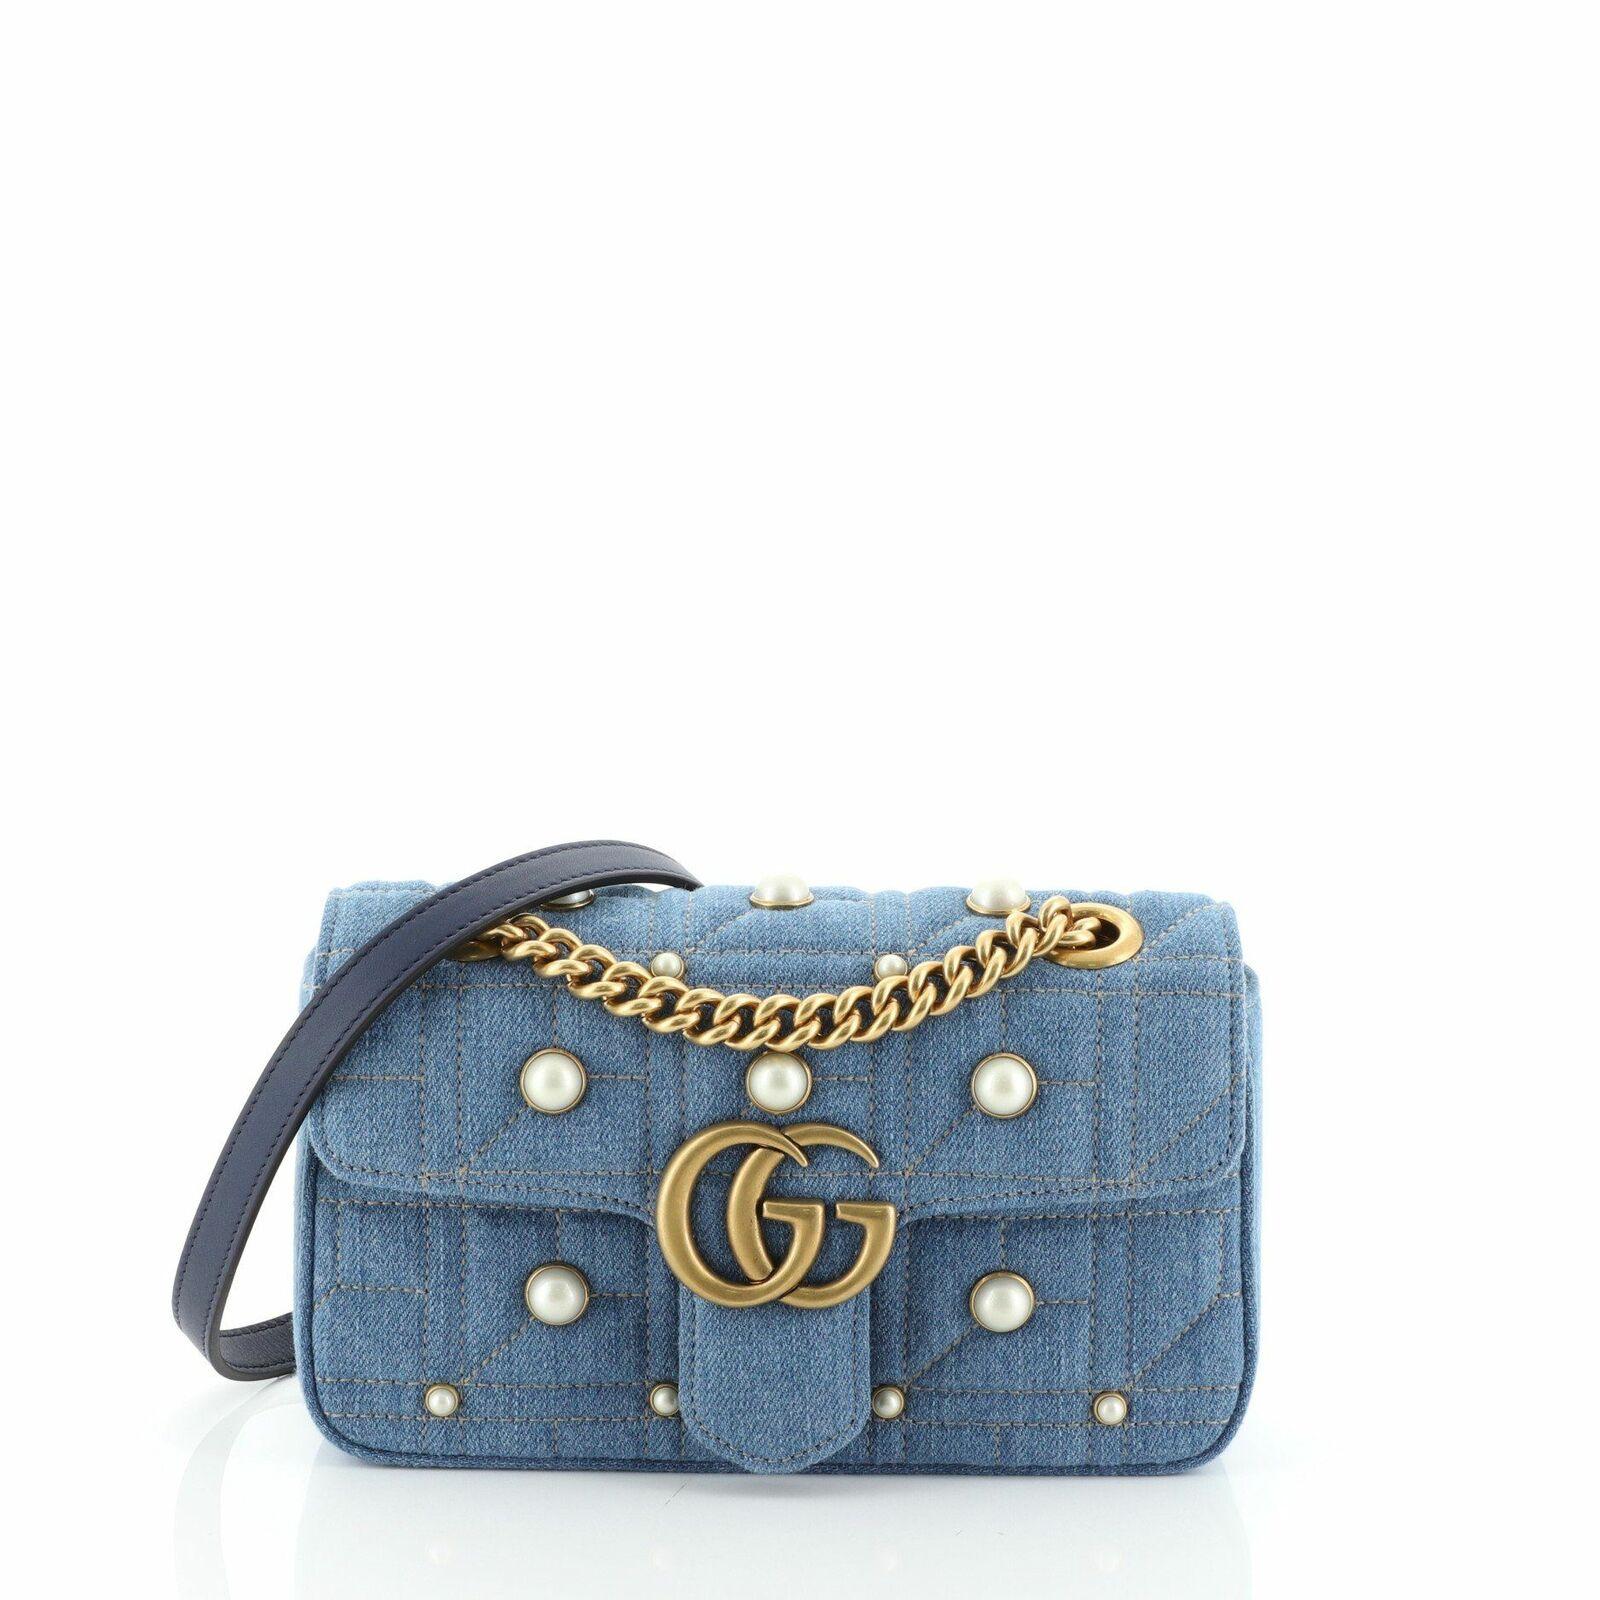 Gucci Gg Marmont 2.0 Imitation Pearl Embellished Denim Crossbody Bag in Light Blue (Blue) - Lyst